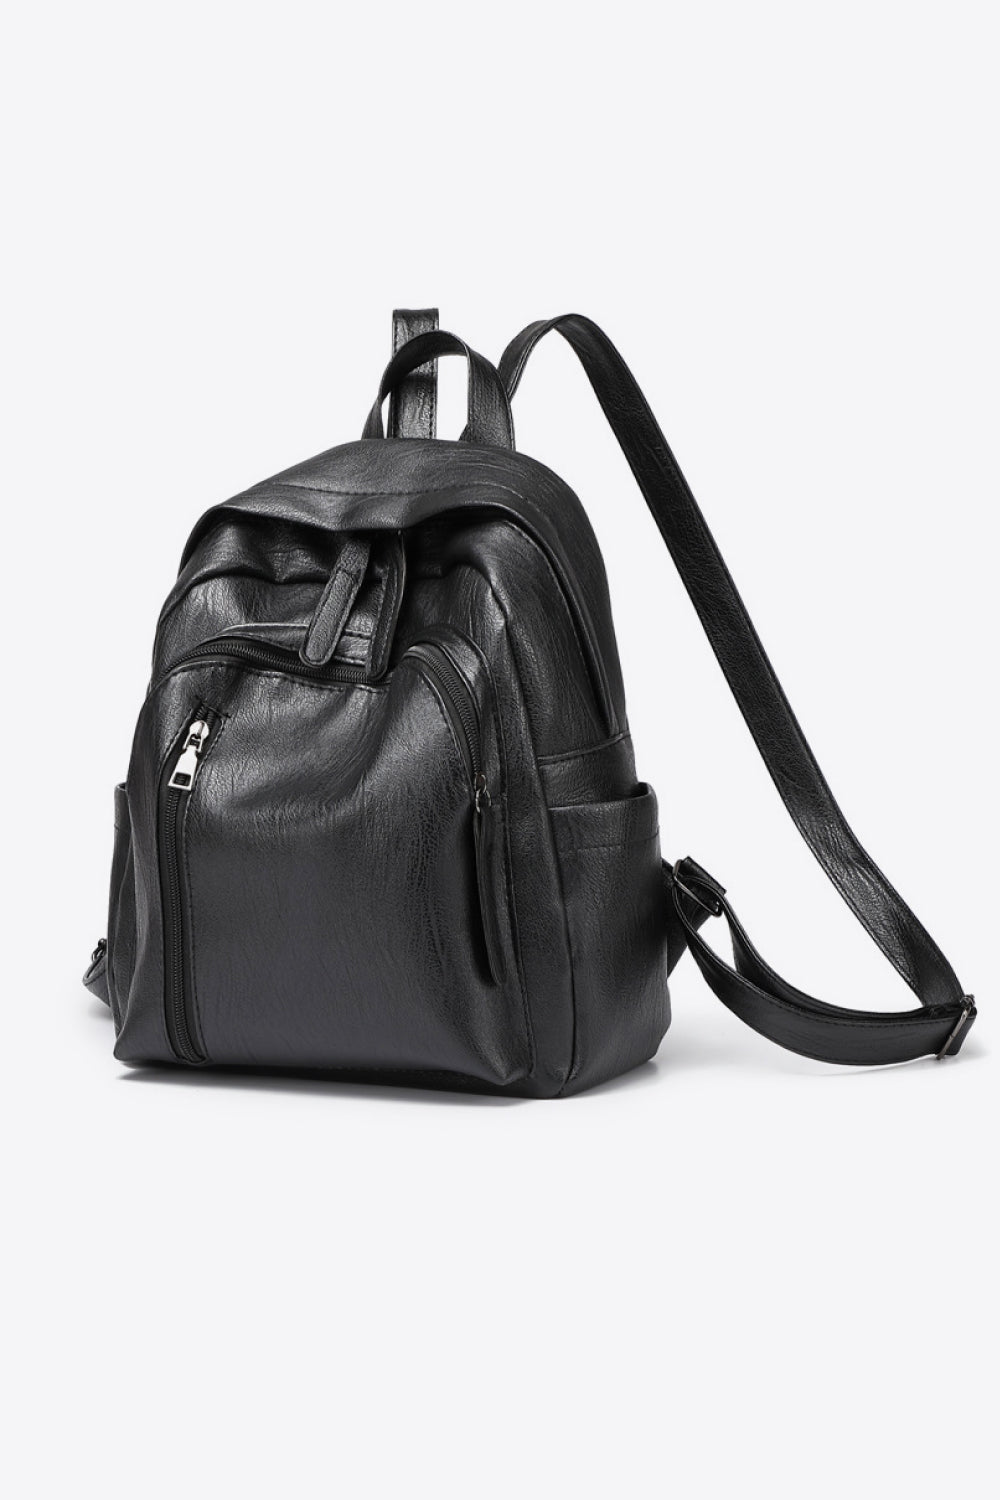 Backpacks - Sevhenn Boutique